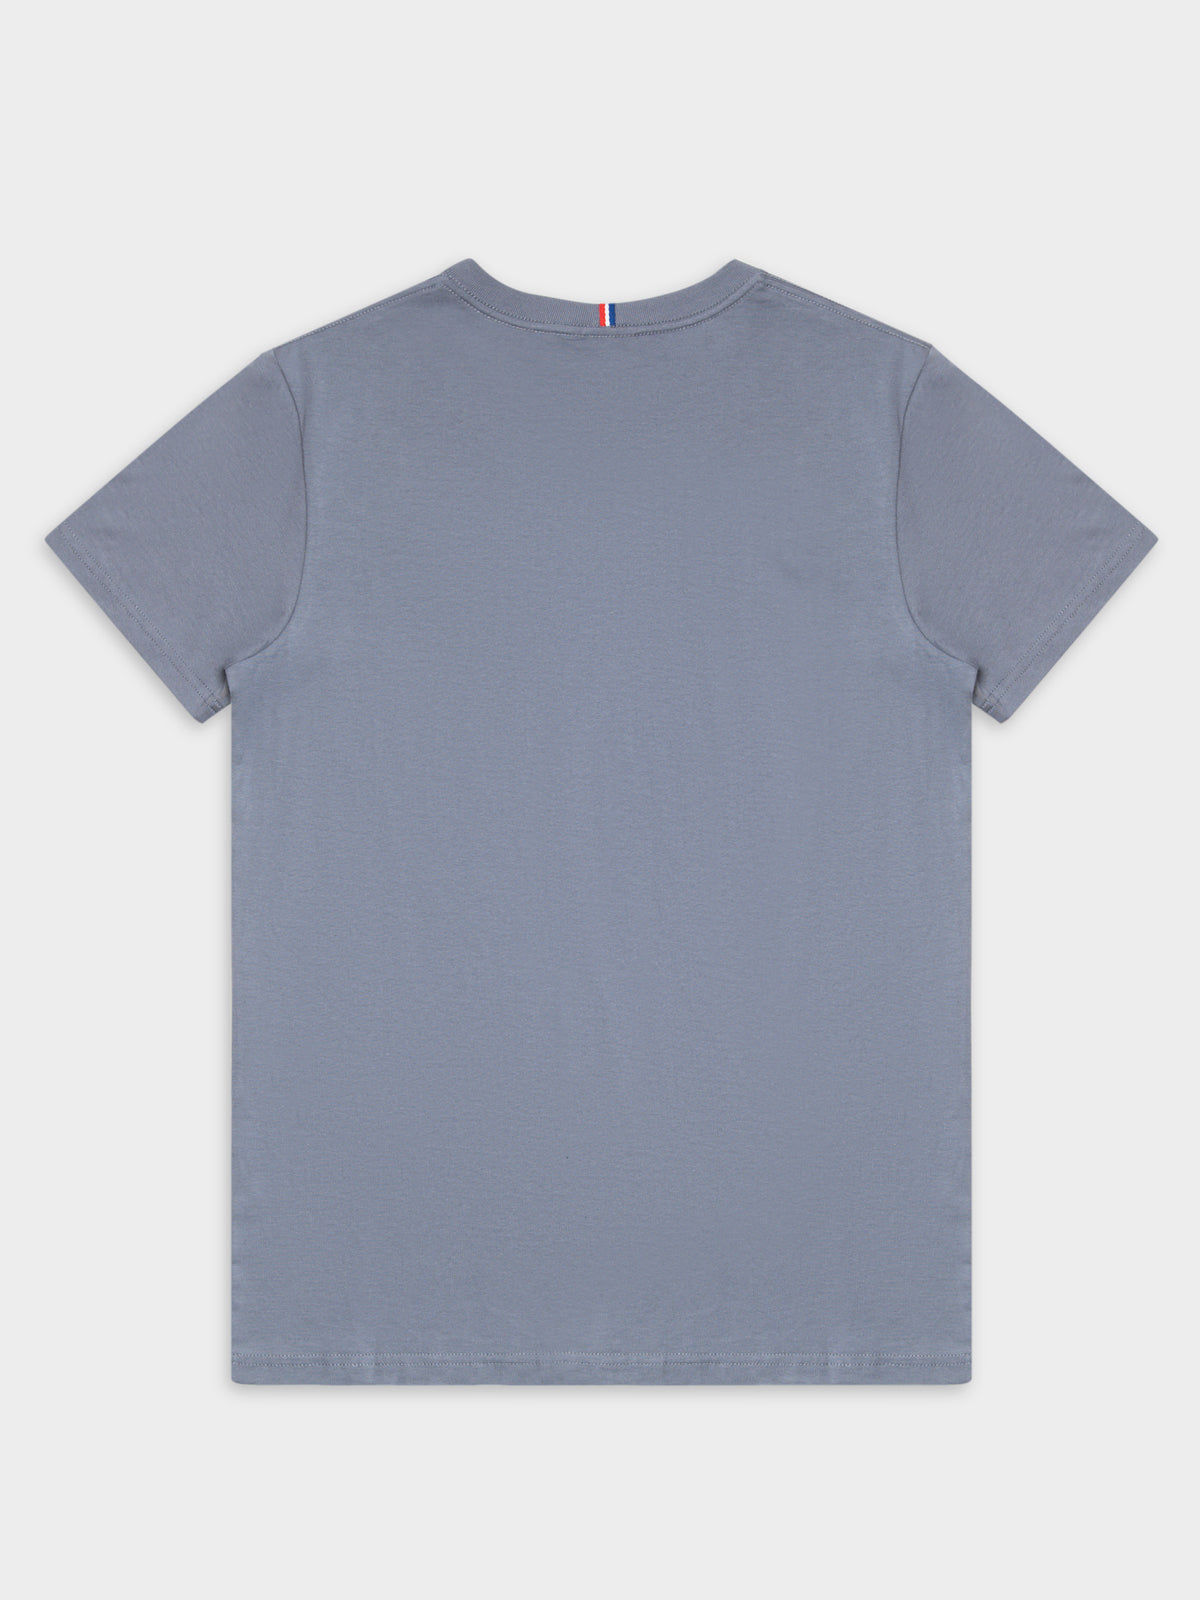 Essential T-Shirt in Dress Blues